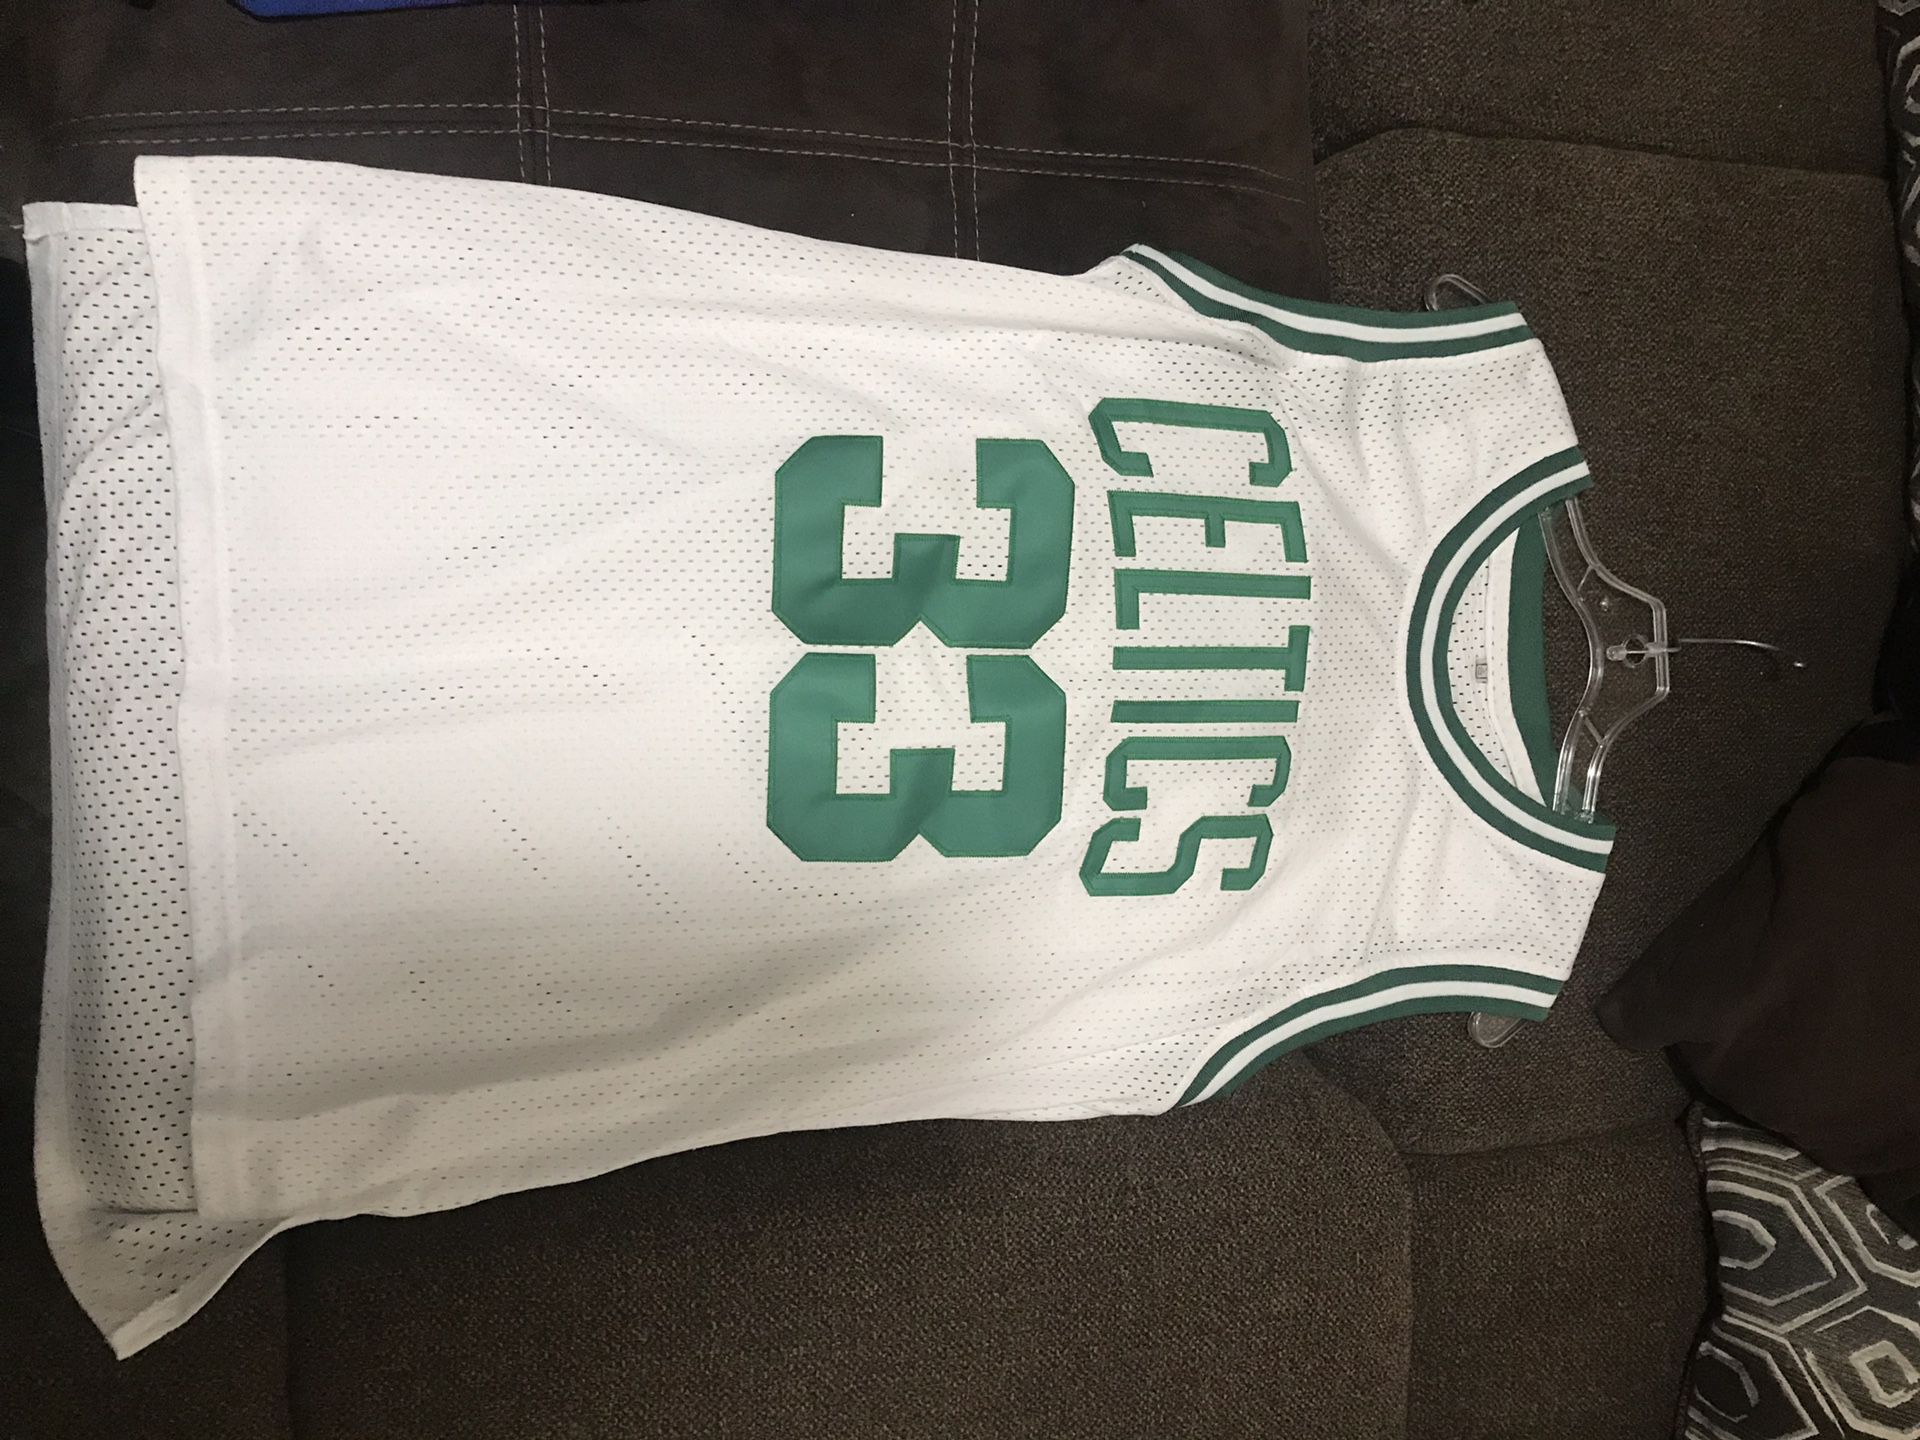 Larry Bird Celtics jersey